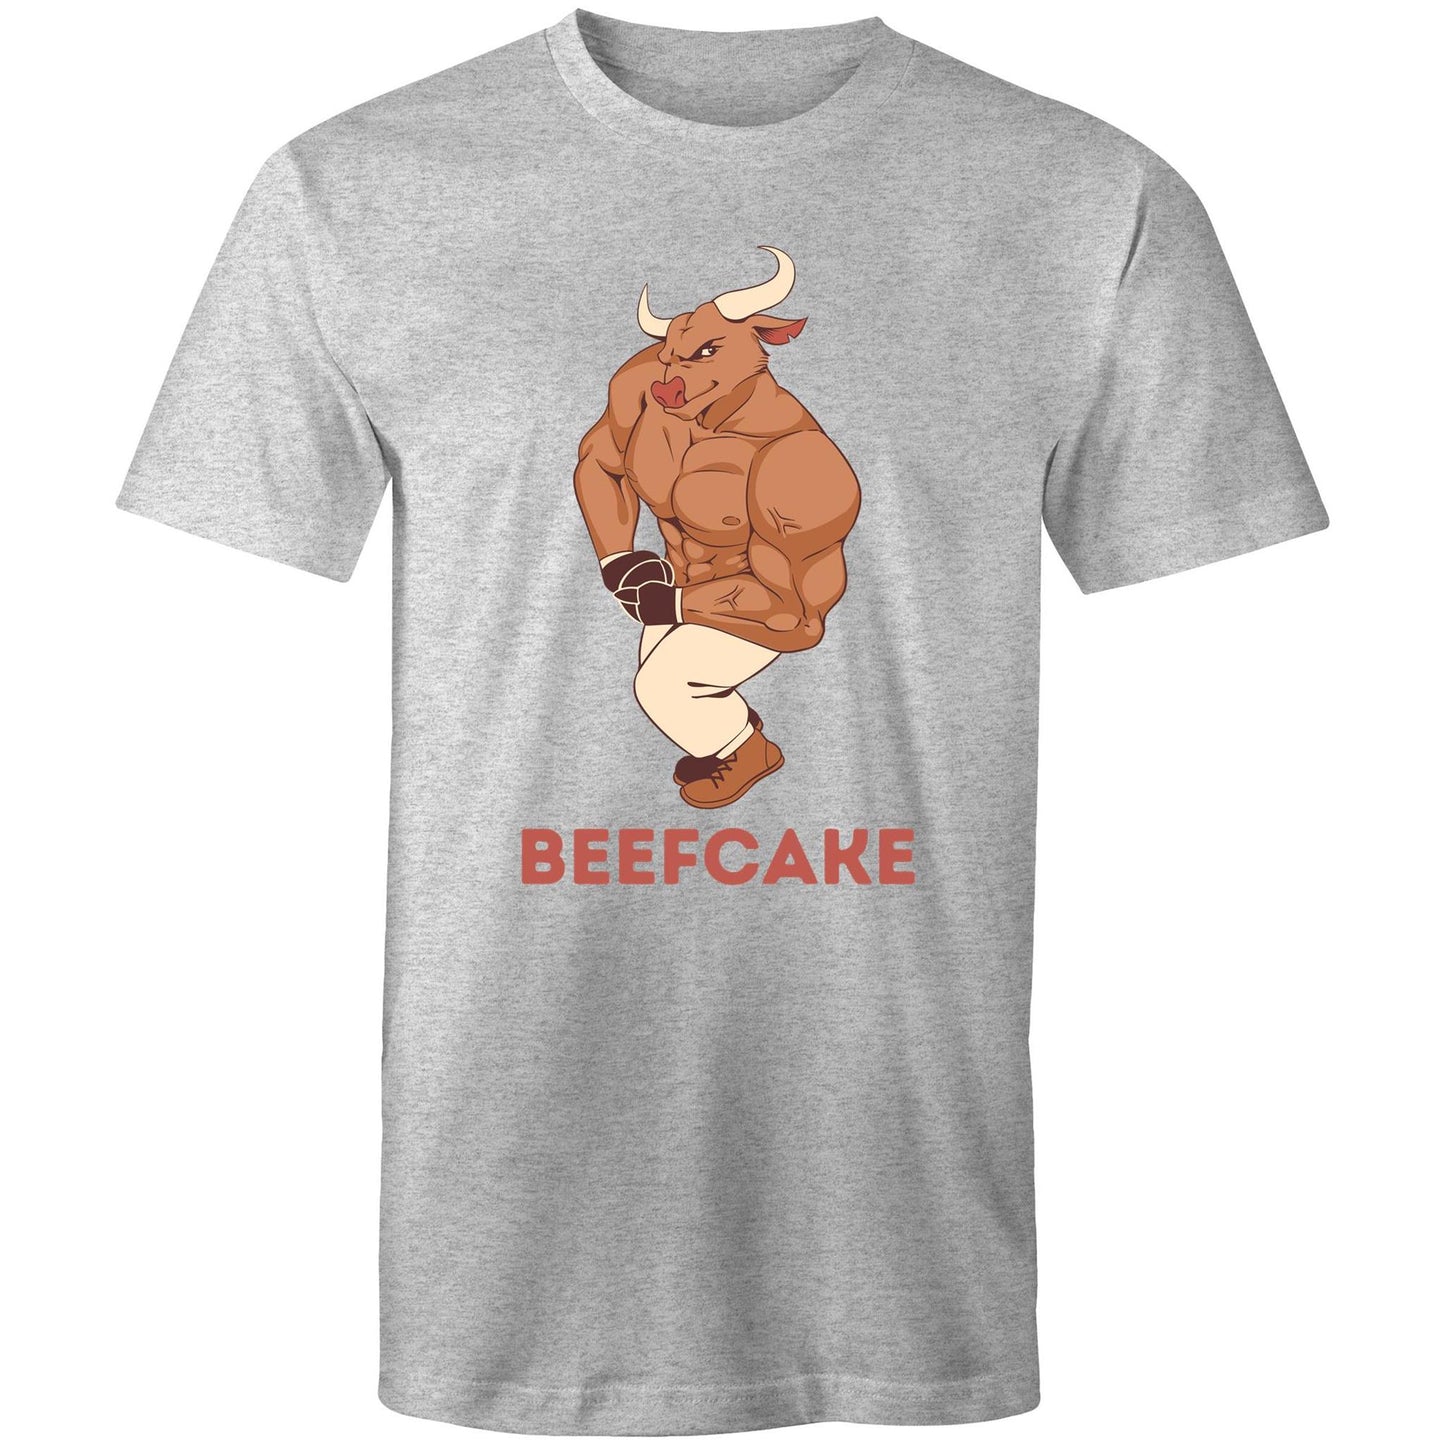 Beefcake, Bull, Gym - Mens T-Shirt Grey Marle Fitness T-shirt Fitness